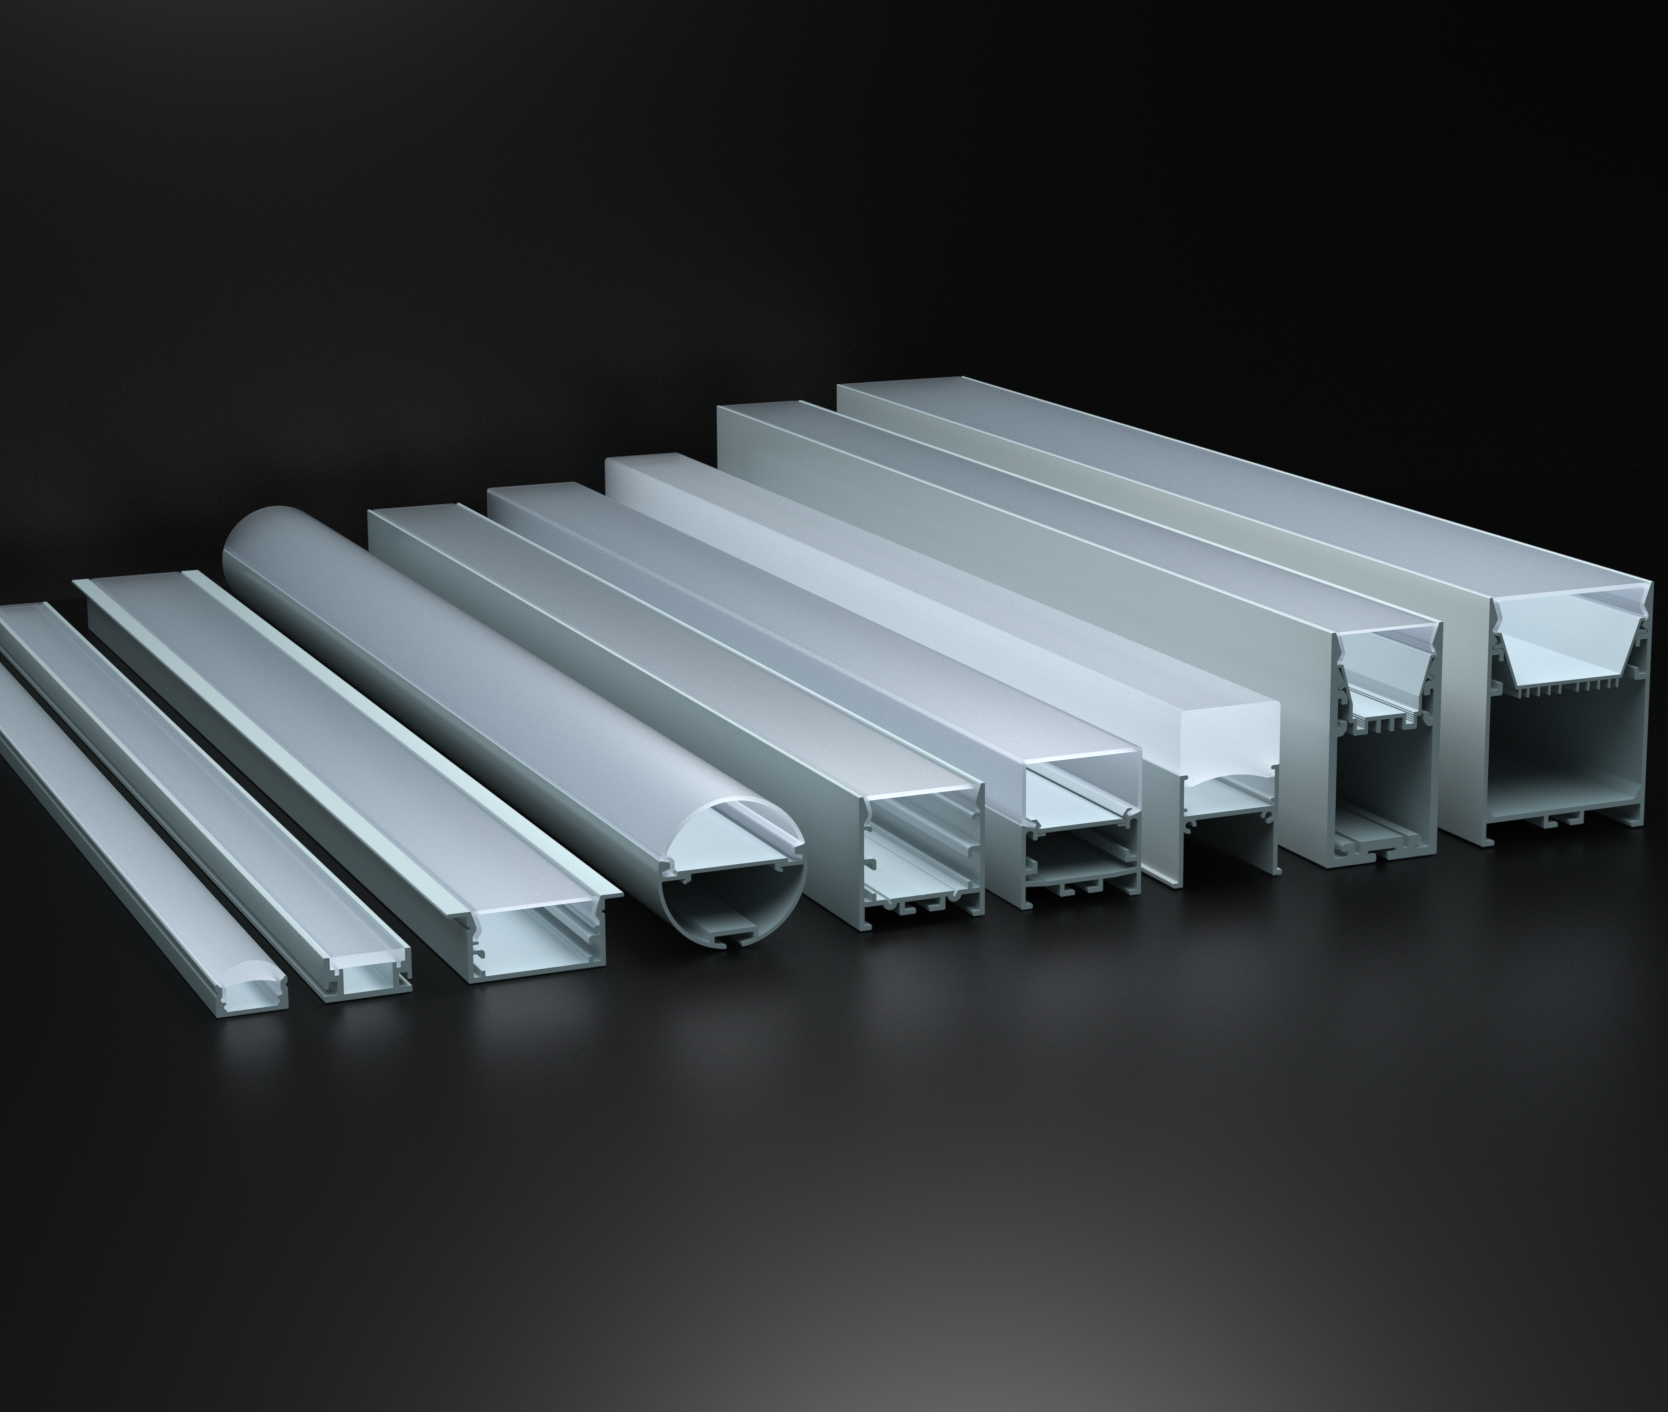 LED Aluminum Profile Manufacturer